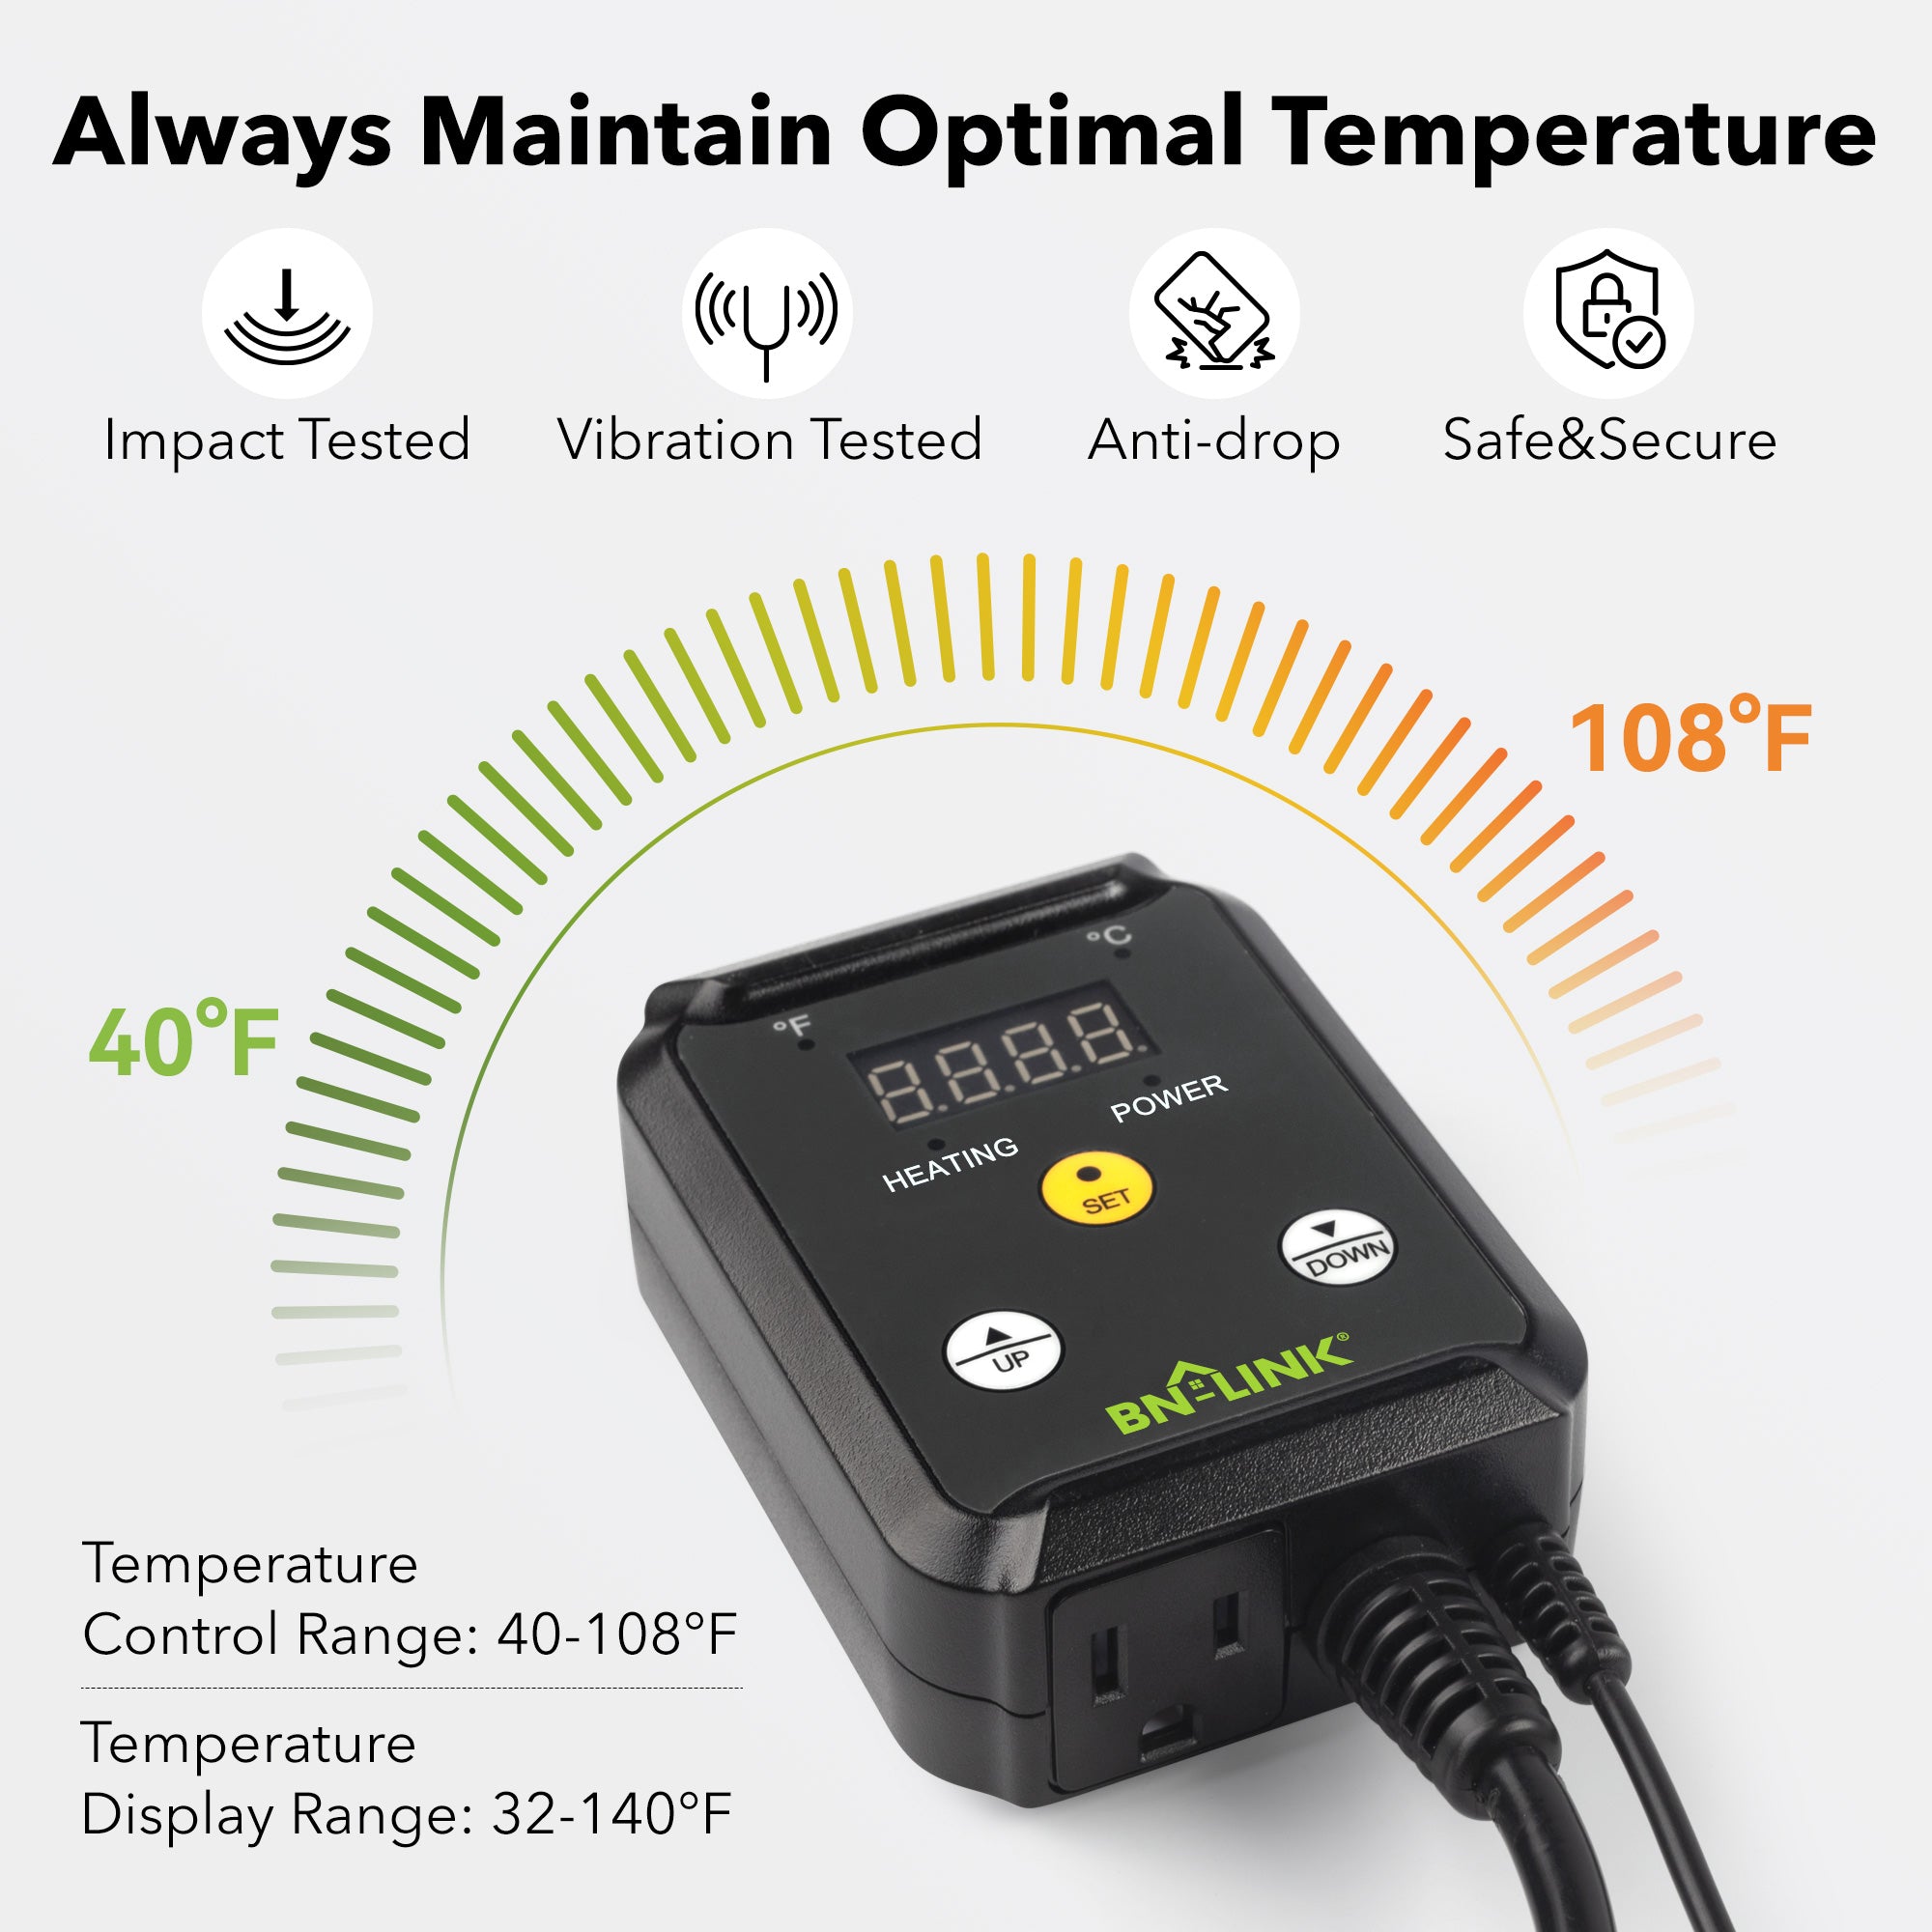 Digital Heat Mat Thermostat Controller 40-108°F BN-LINK